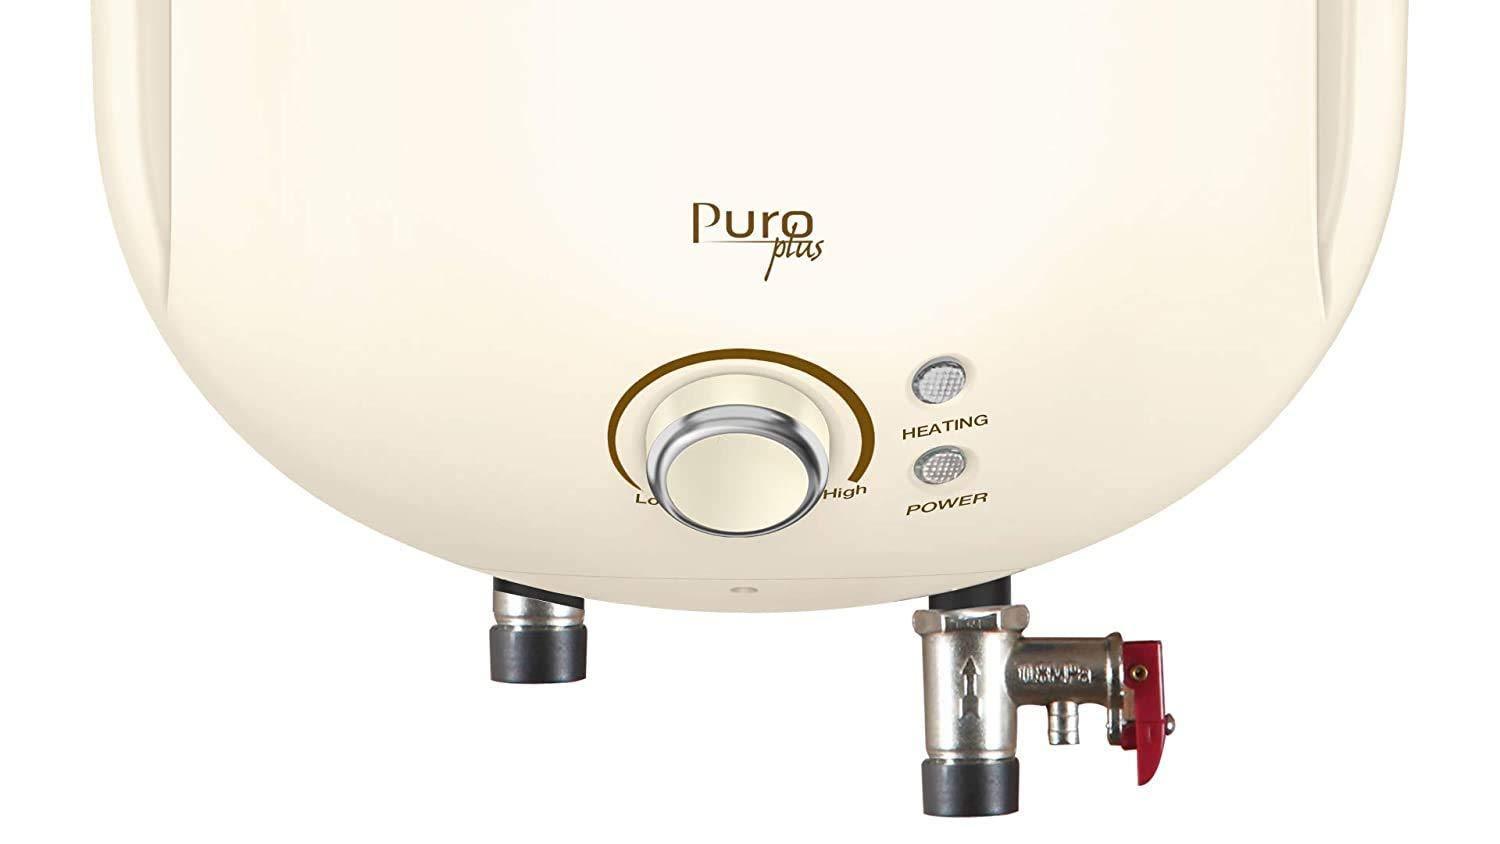 Havells Puro Turbo 15-Litre Storage Heater with Flexi Pipe, Safe Shock Plug (Ivory)-Home & Kitchen Appliances-dealsplant